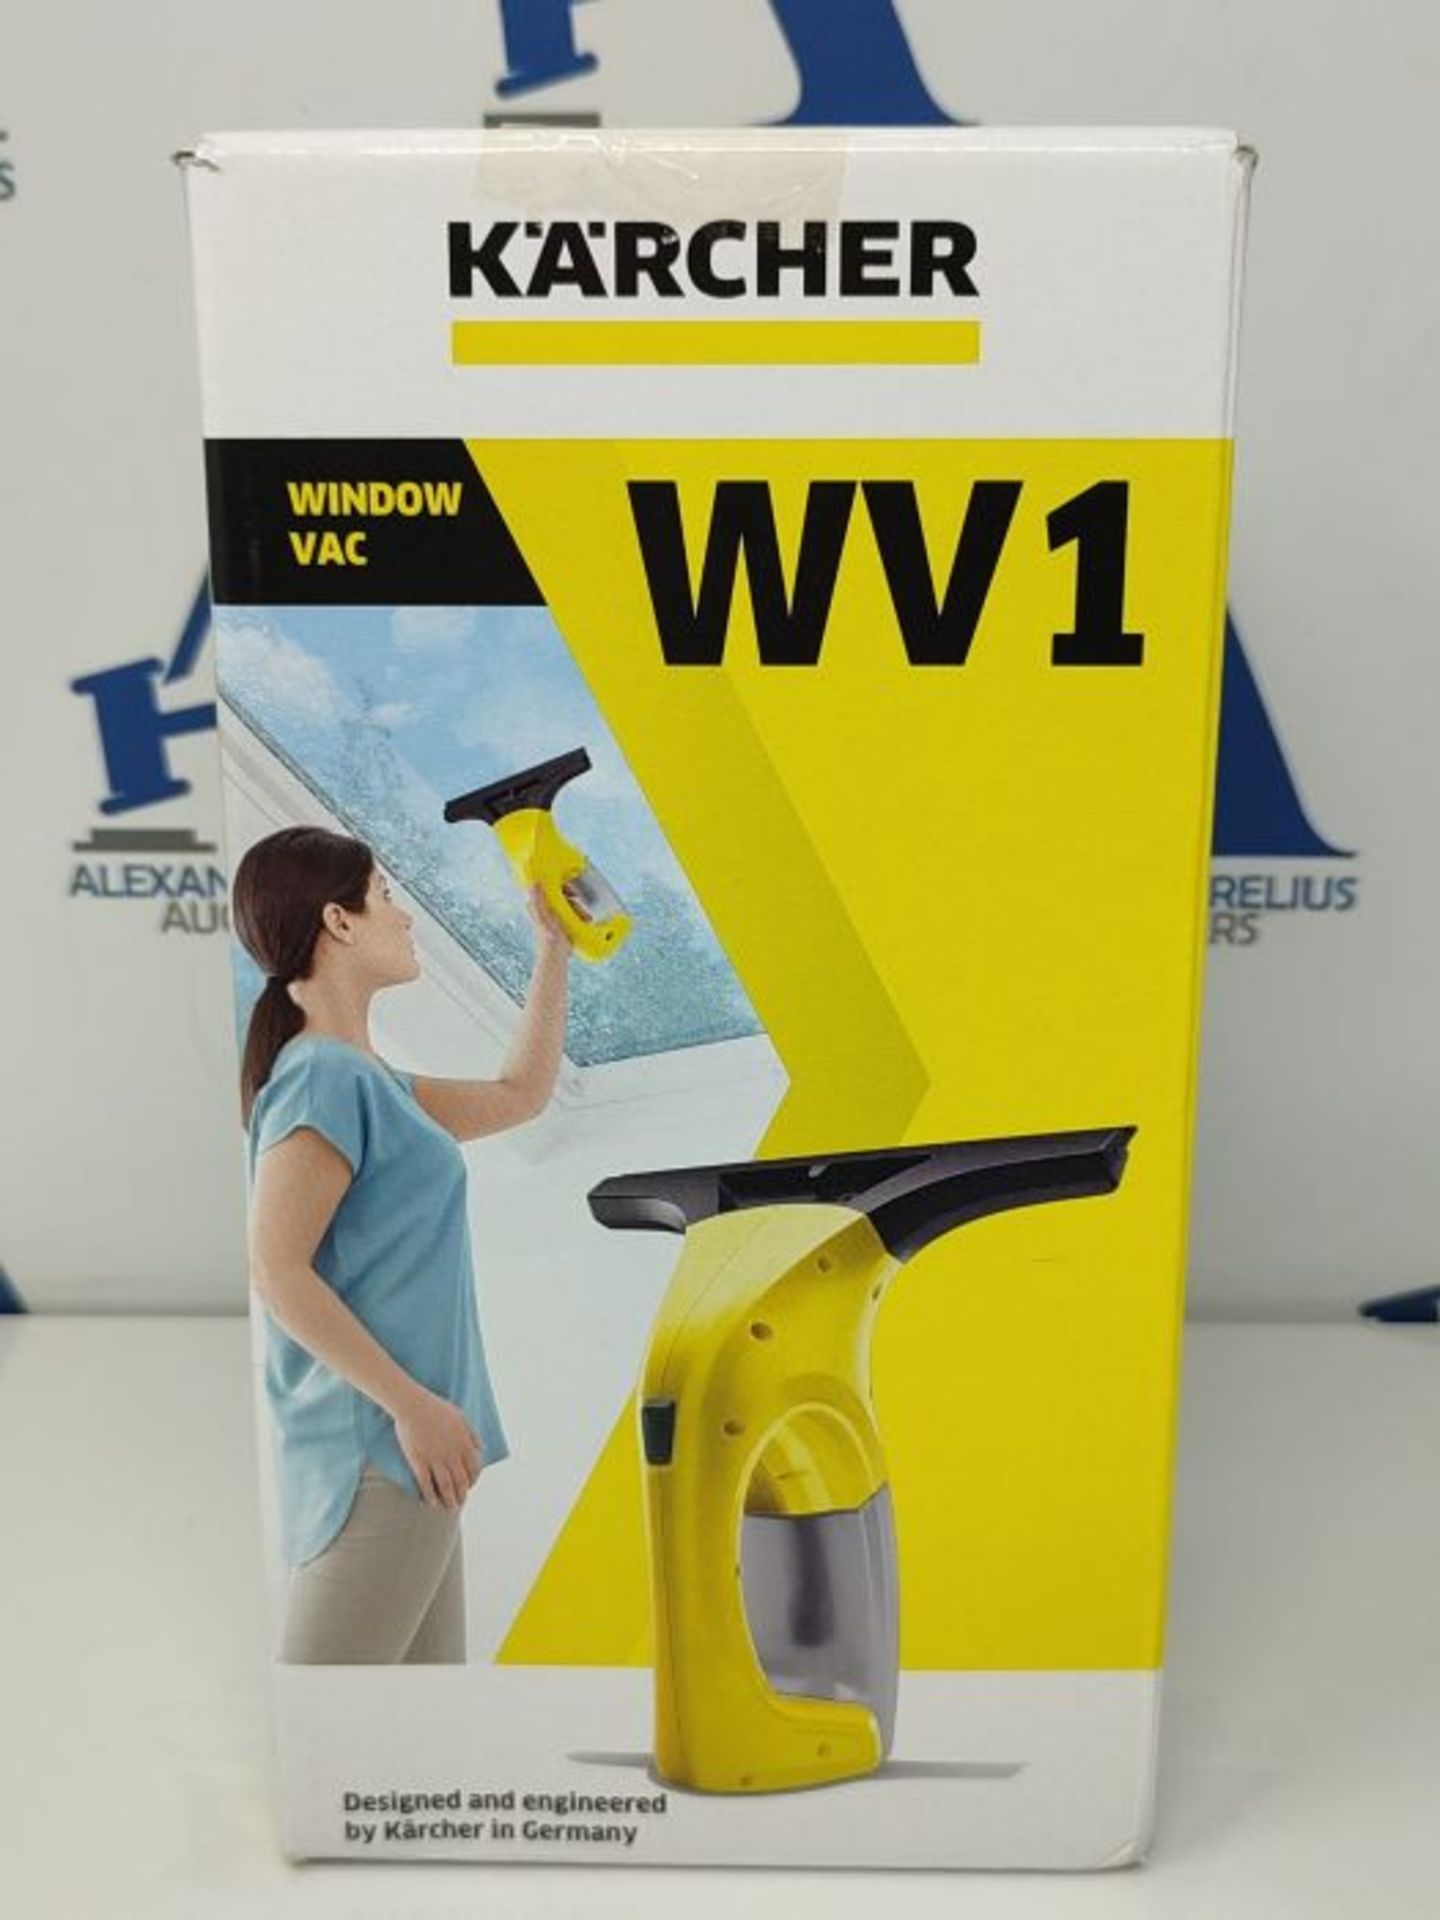 Kärcher WV 1 Window Vac - Image 2 of 3